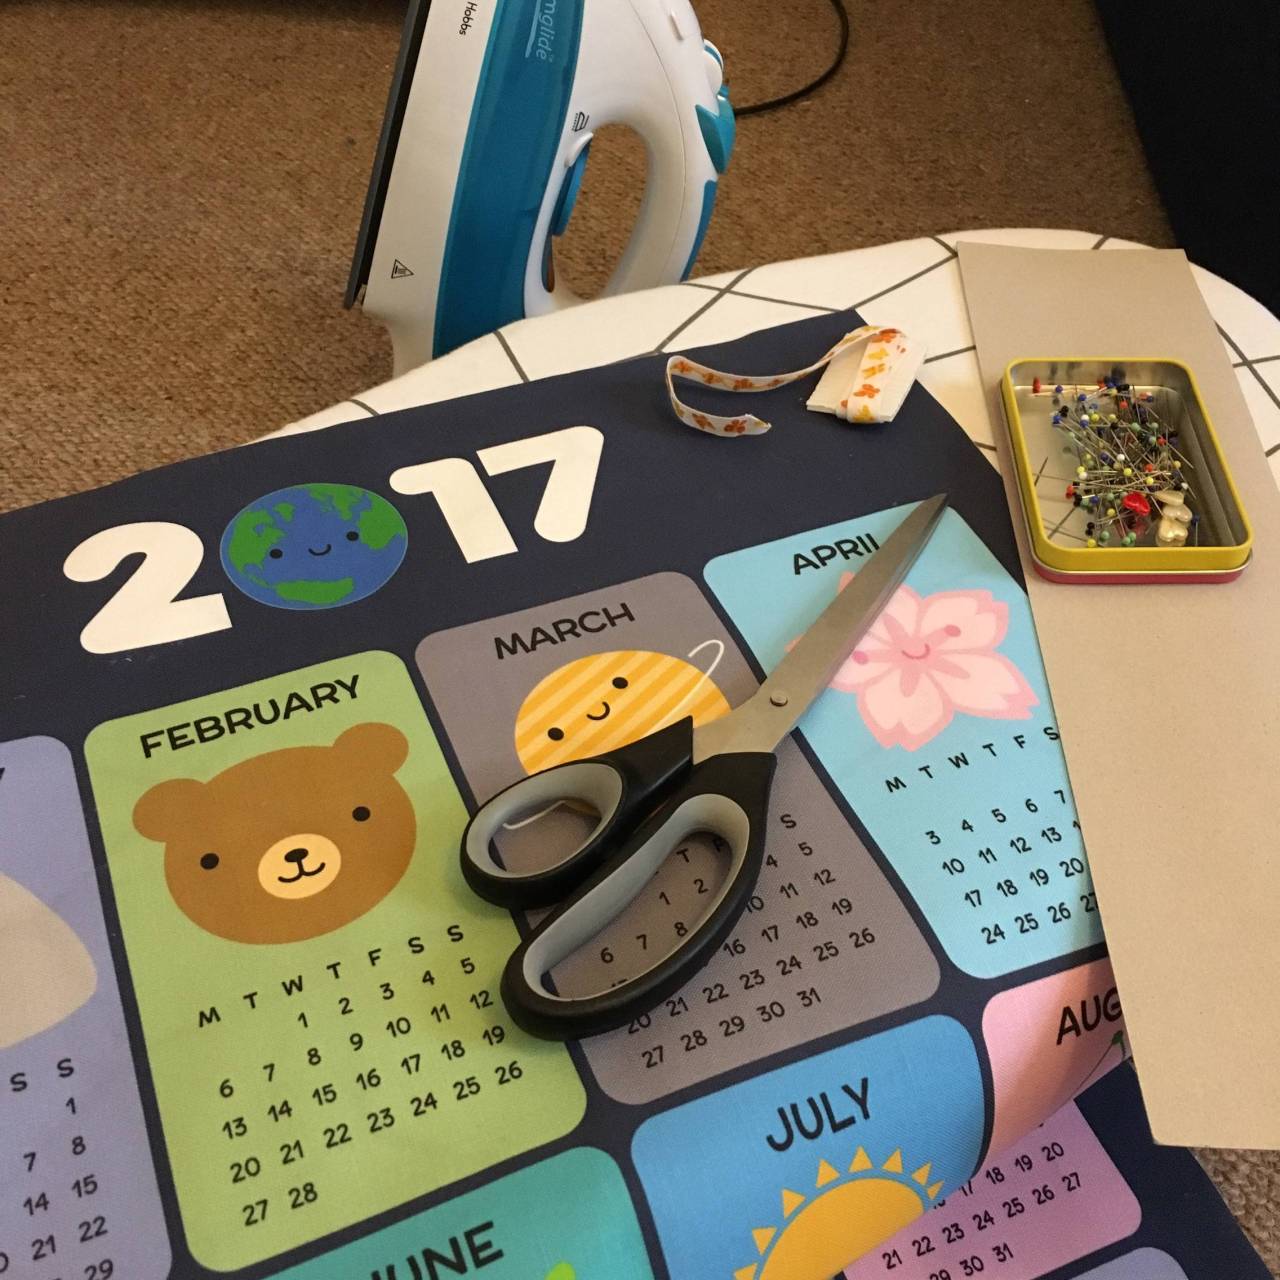 How To Make A Cut & Sew Tea Towel Calendar From Spoonflower